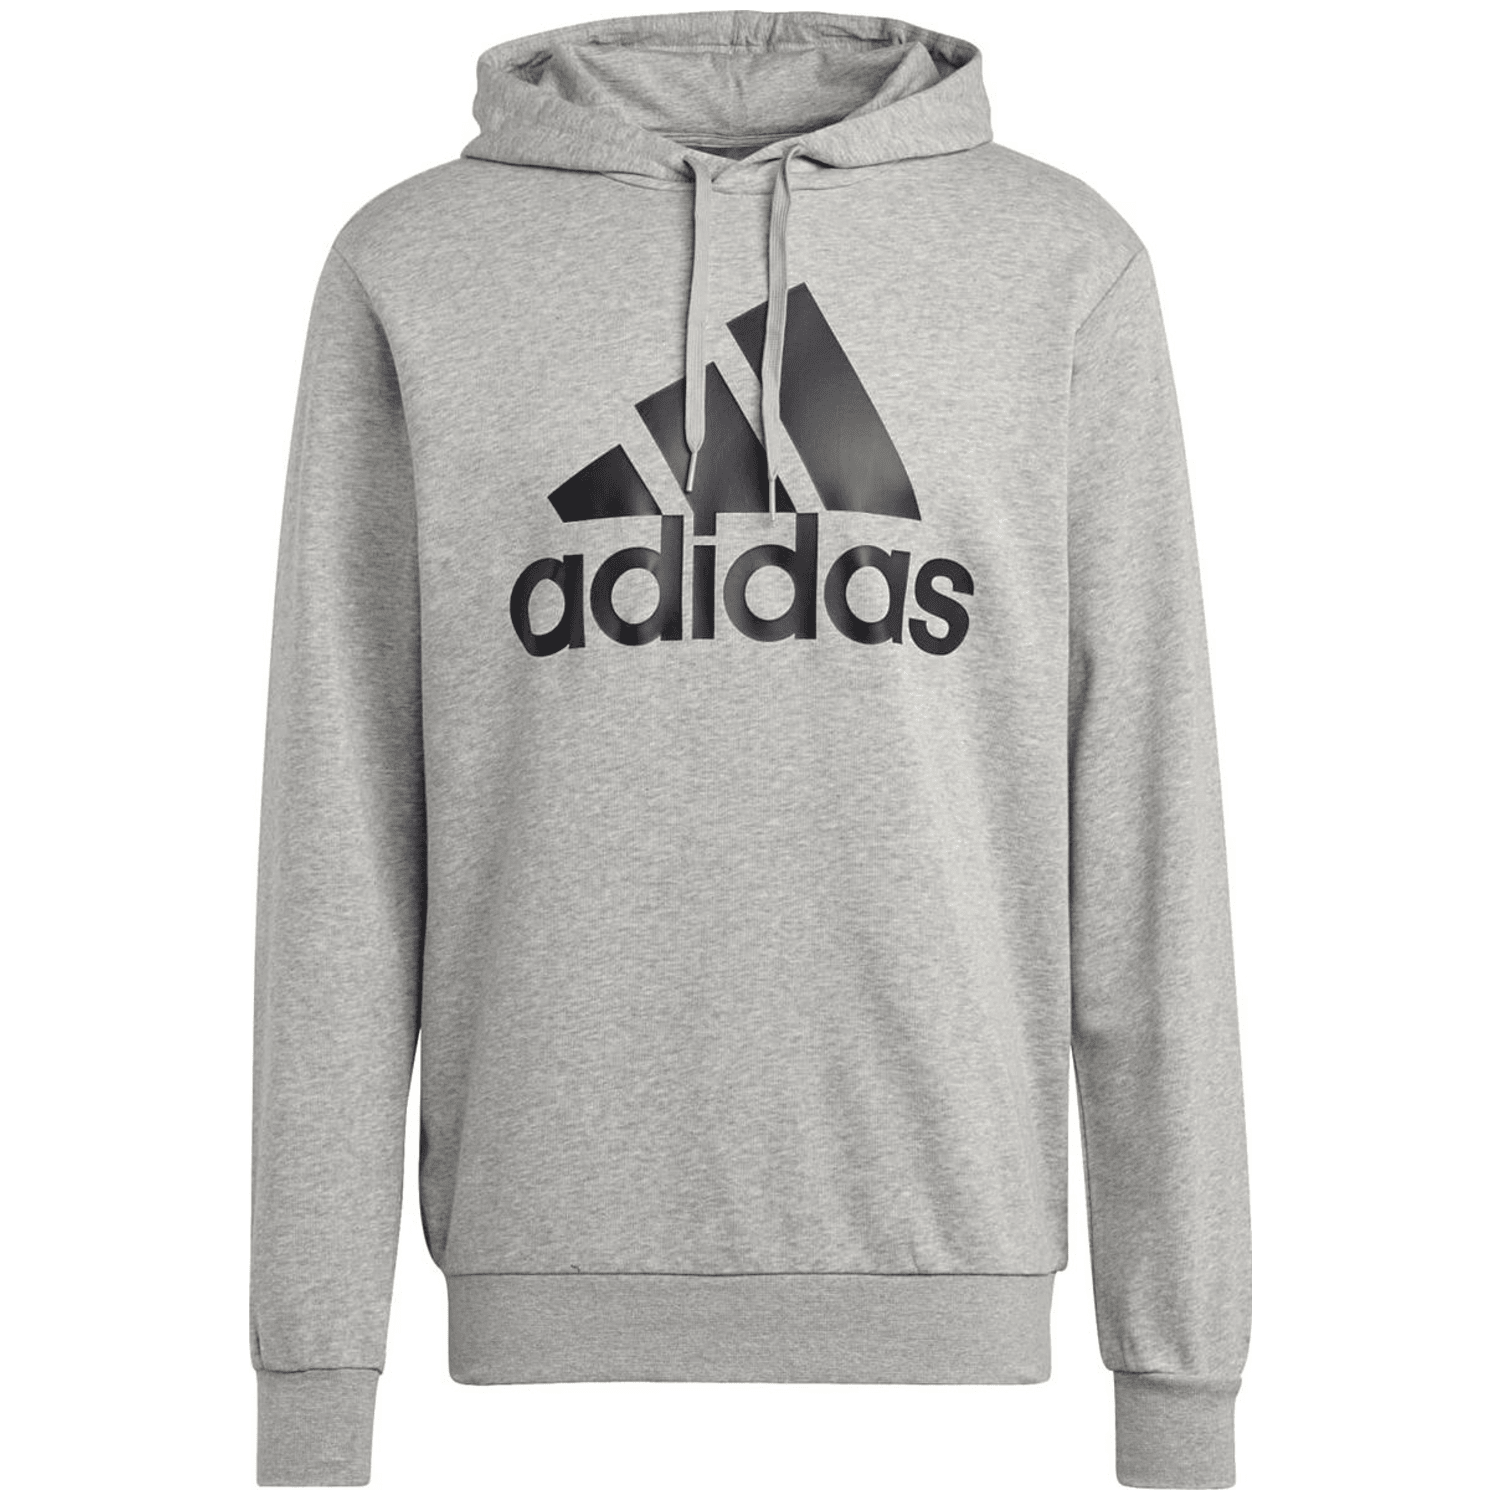 Adidas Big Logo Terry Trainingsanzug Herren